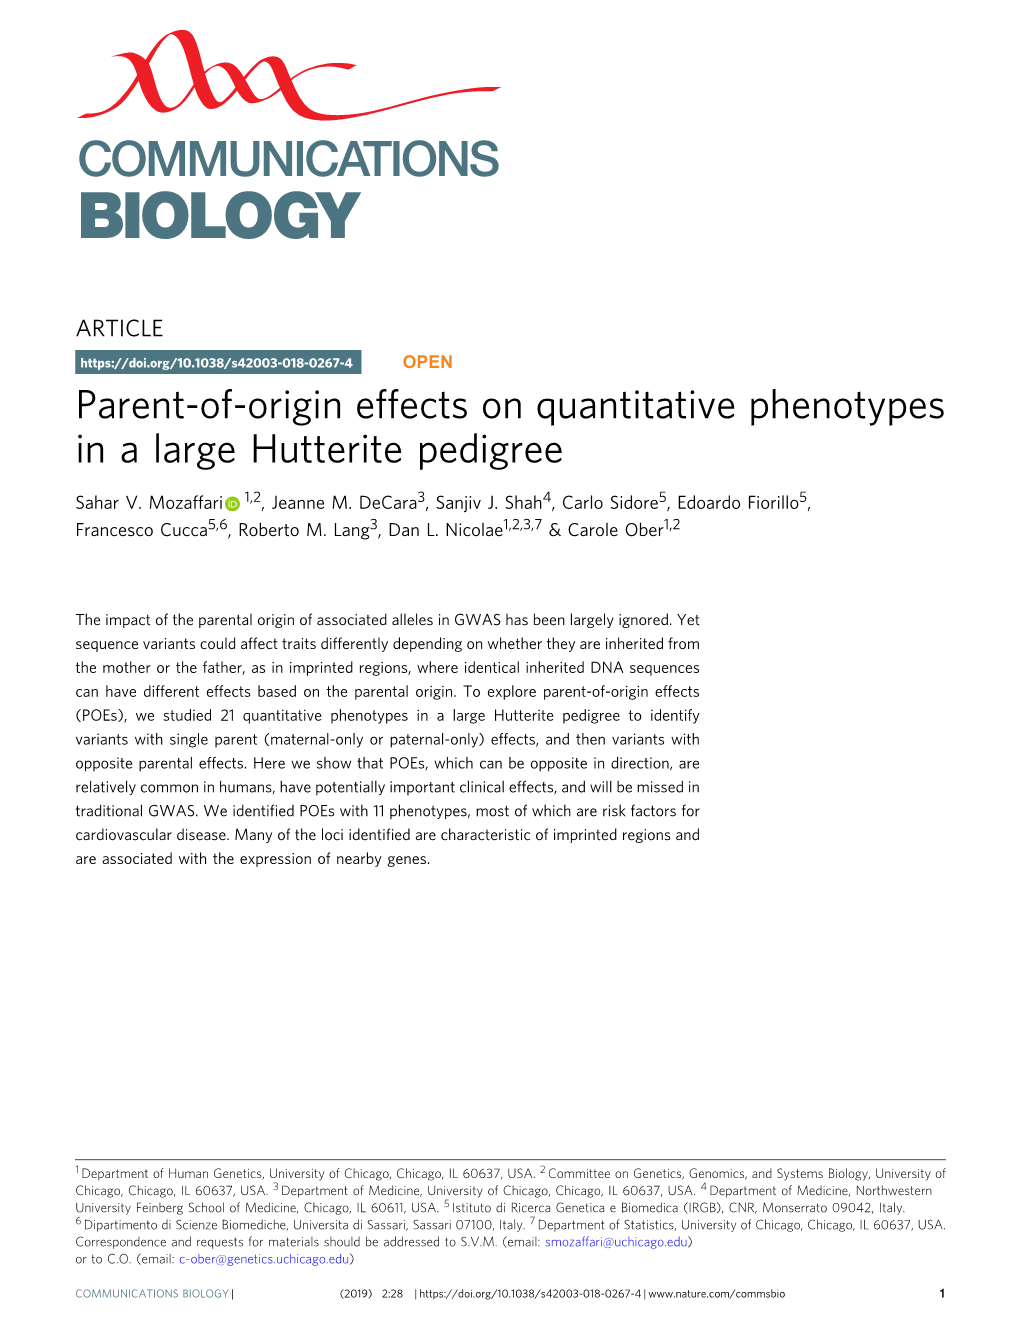 Parent-Of-Origin Effects on Quantitative Phenotypes in a Large Hutterite Pedigree